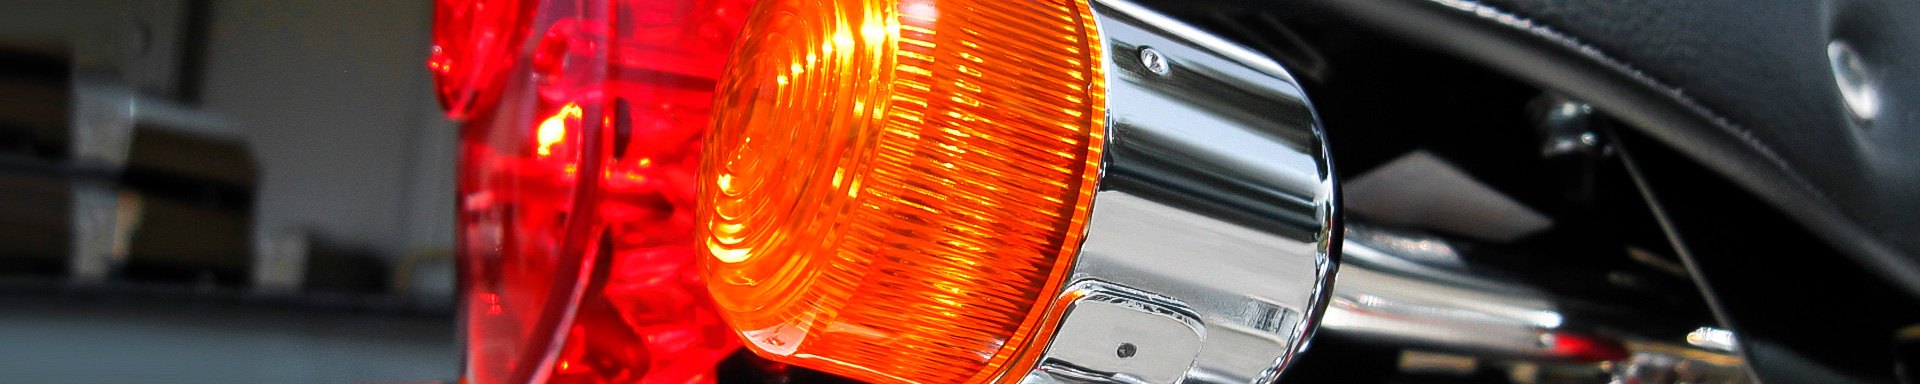 Motorcycle Light Lenses